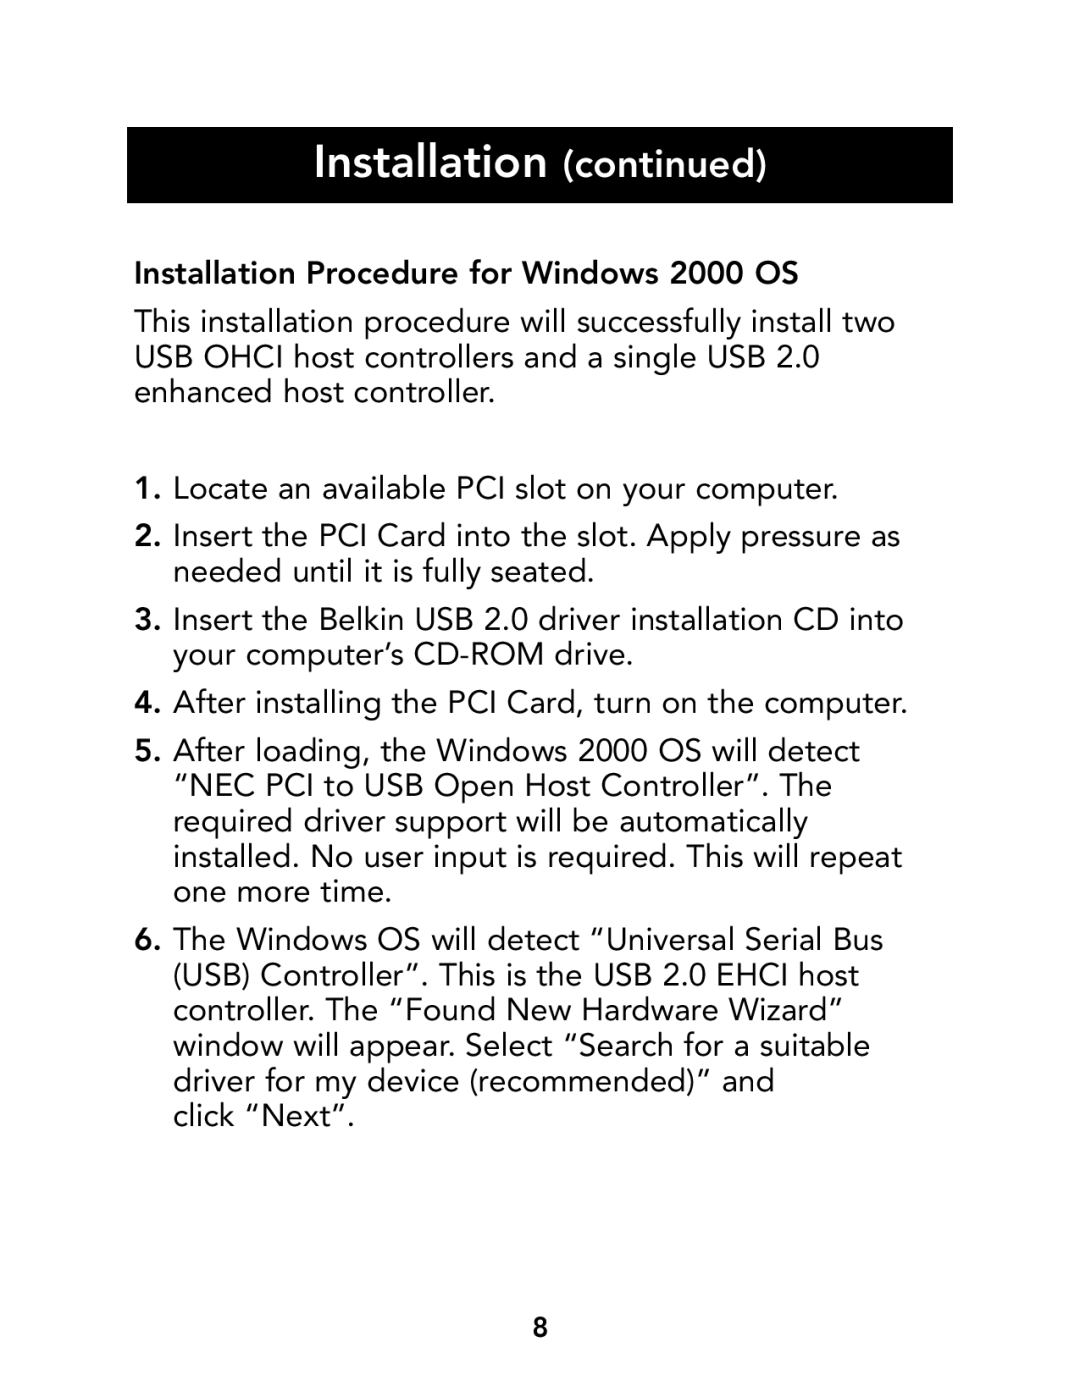 Belkin F5U219, P73941 manual Installation continued, Installation Procedure for Windows 2000 OS 